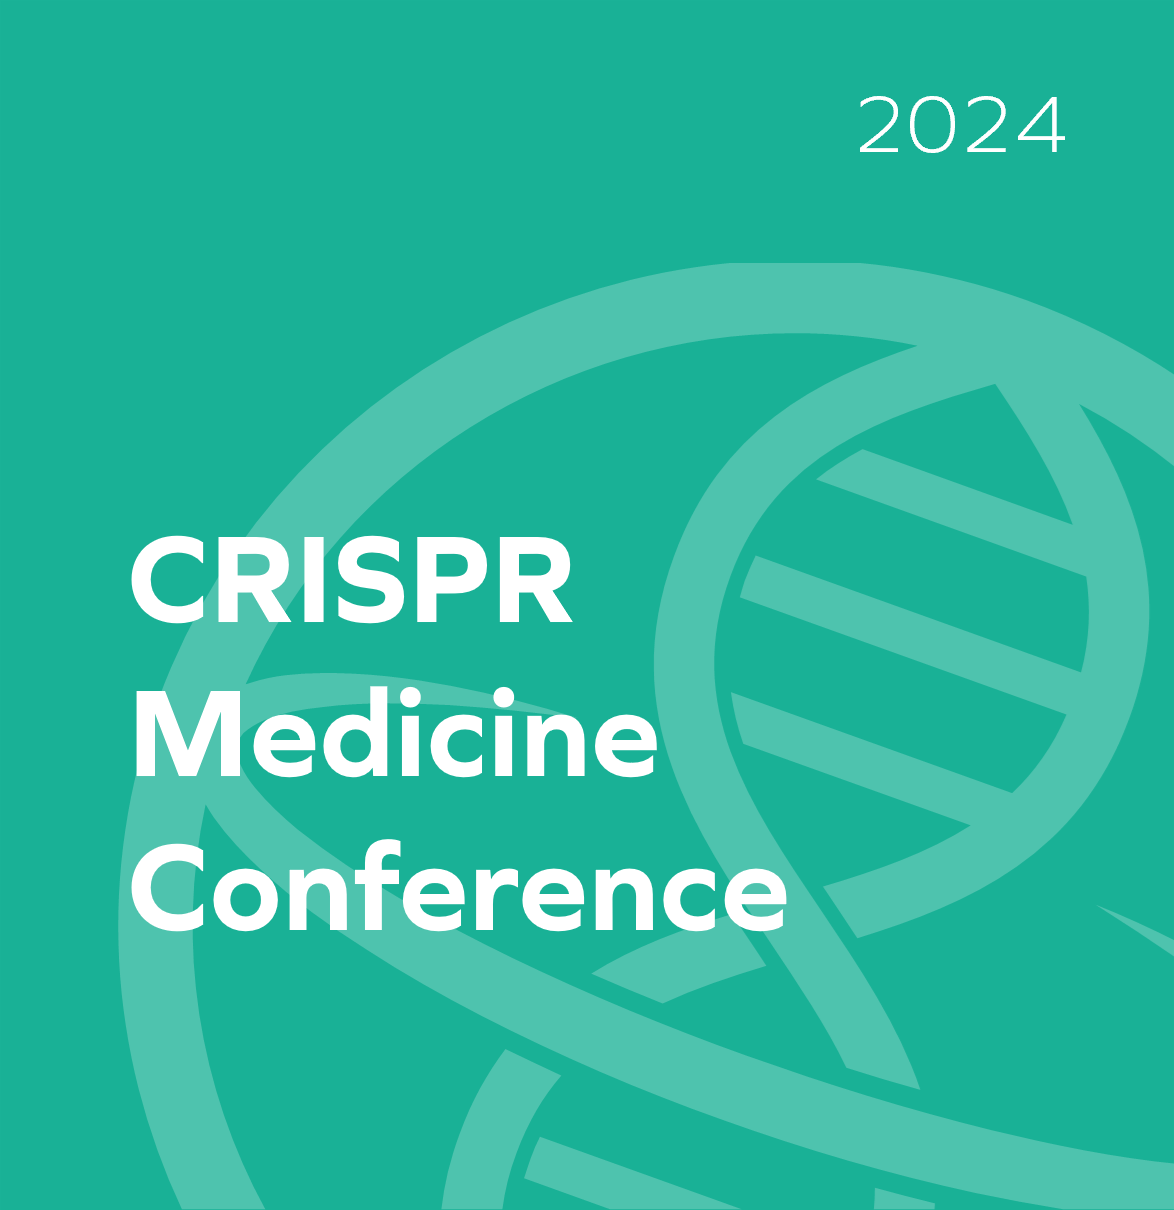 CRISPR Medicine Conference